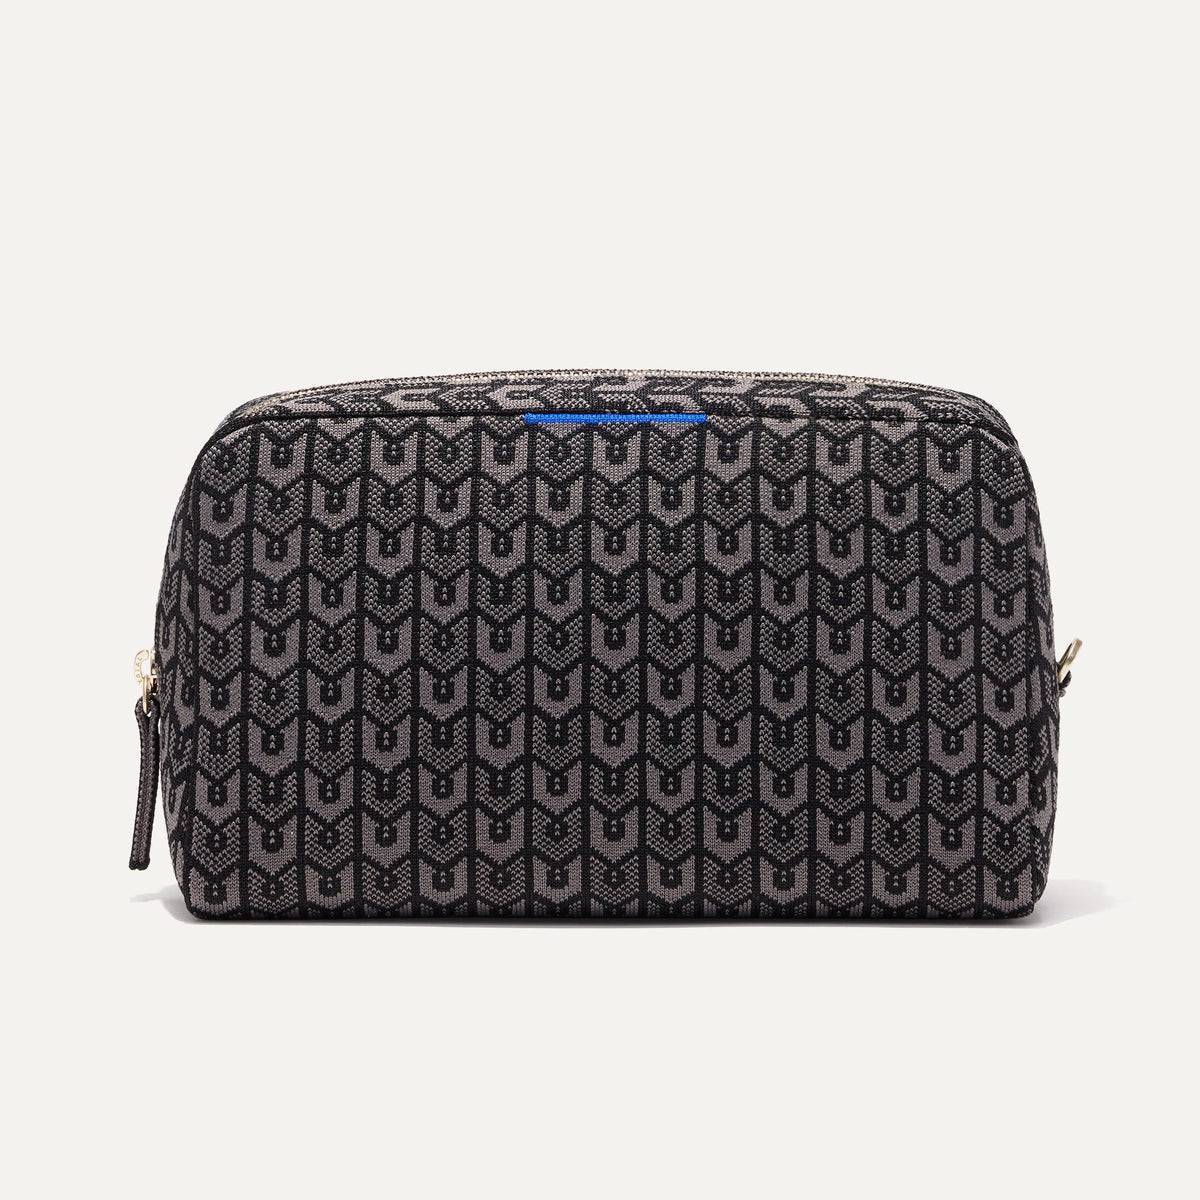 Louis Vuitton Tag - BagAddicts Anonymous